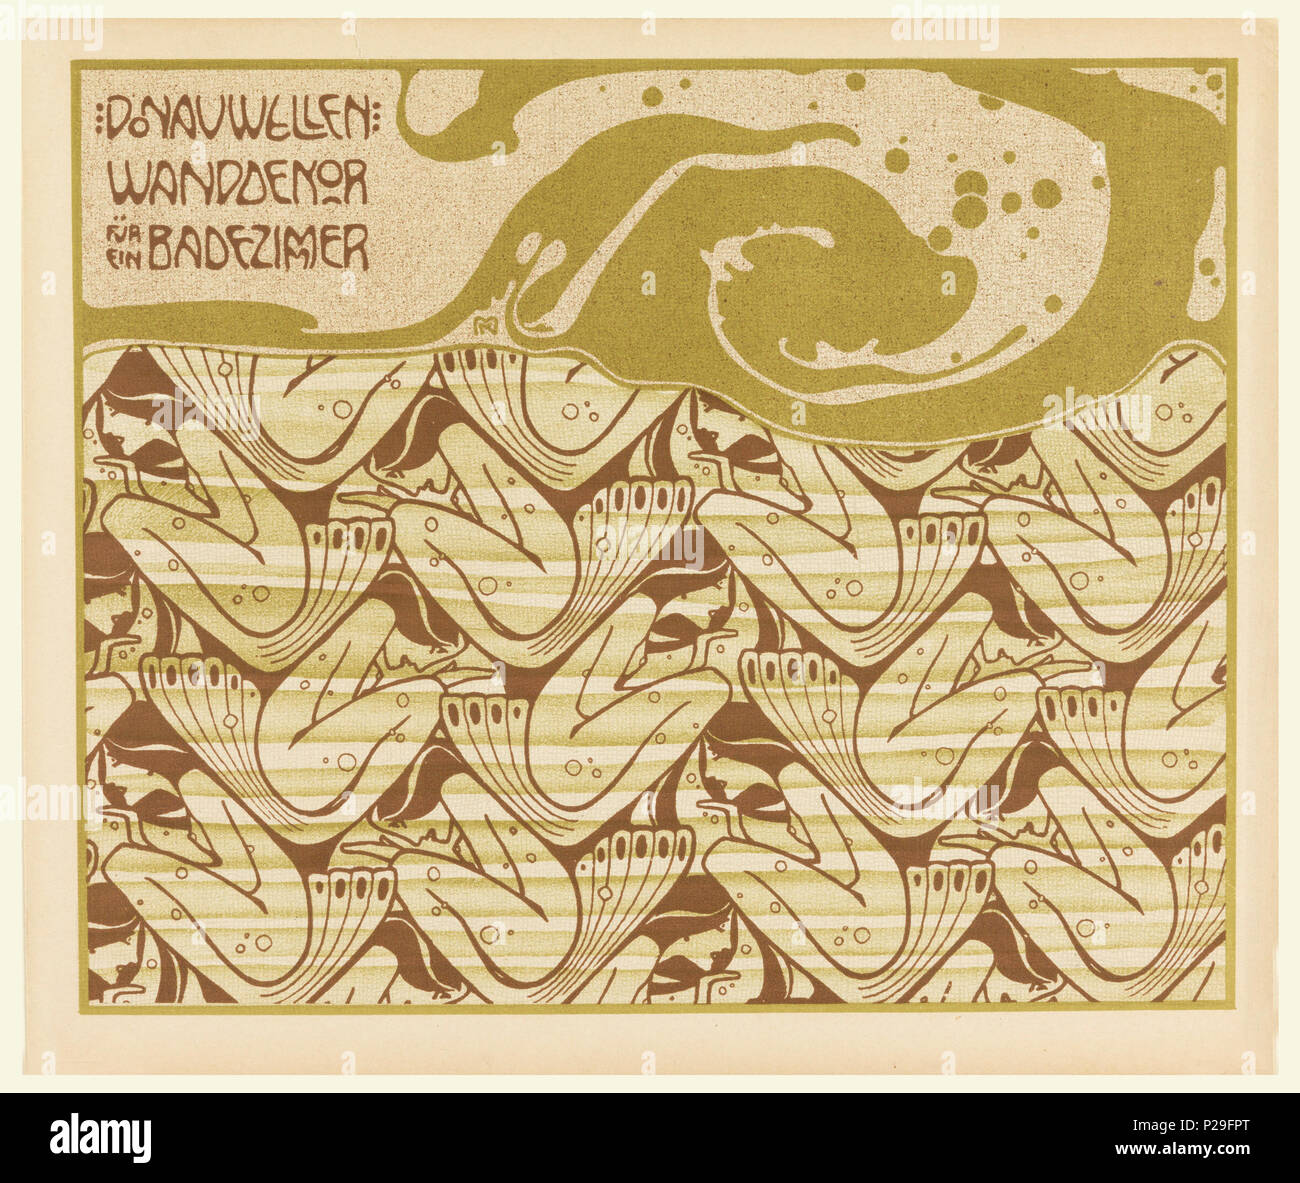 267 Print, Donauwellen Wanddekor fur ein Badezimmer (Danube Wave Wall Decoration for a Bathroom), plate 4, in Die Quelle- Flächen Schmuck (The Source- Ornament for Flat Surfaces), 1901 (CH 18670529) Stock Photo